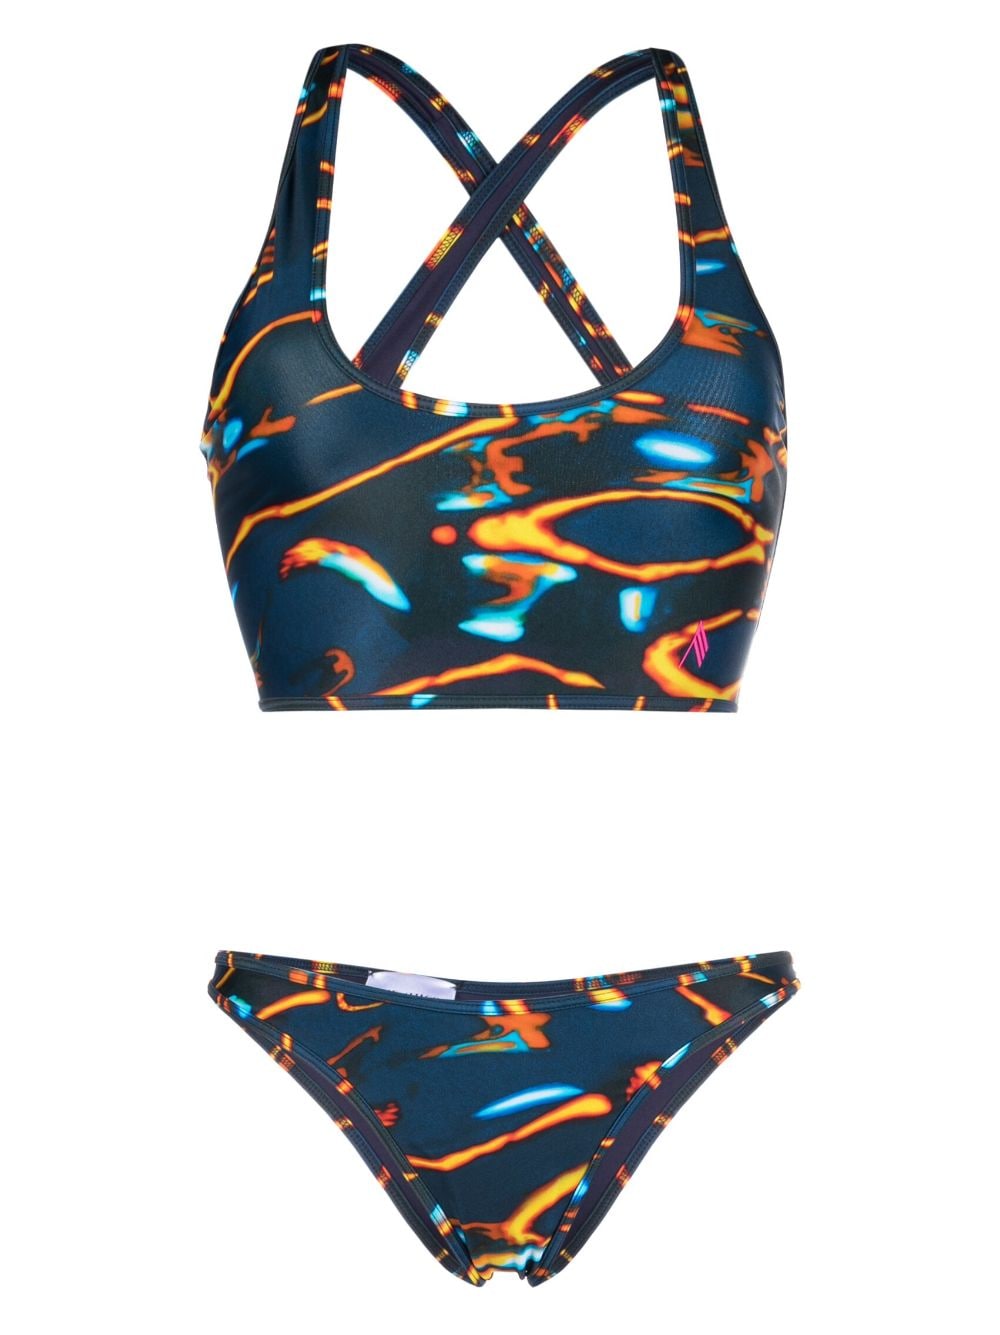 abstract-print two-piece bikini set